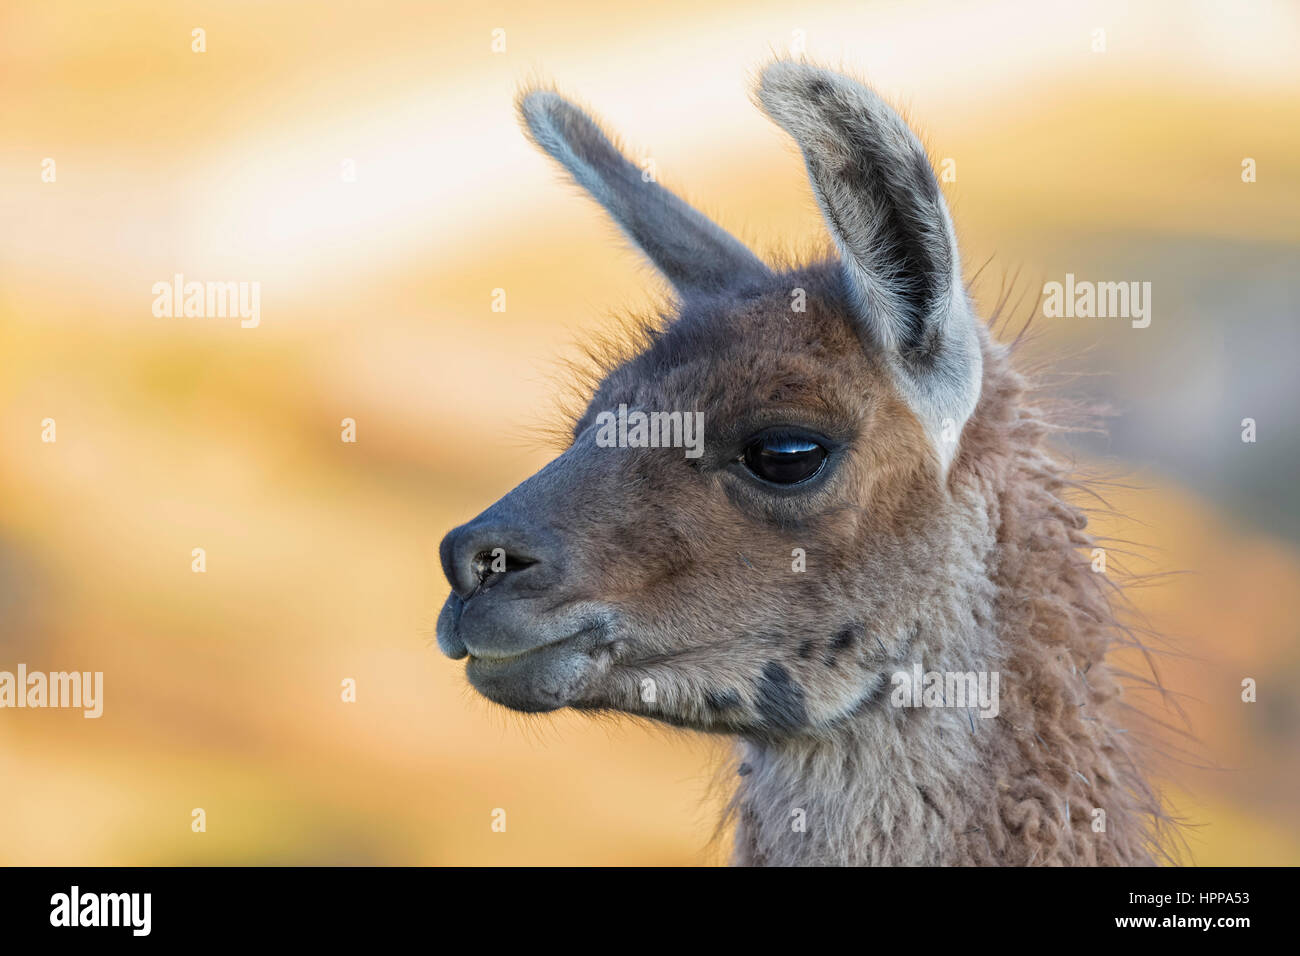 Peru, Andes, portrait of a llama Stock Photo